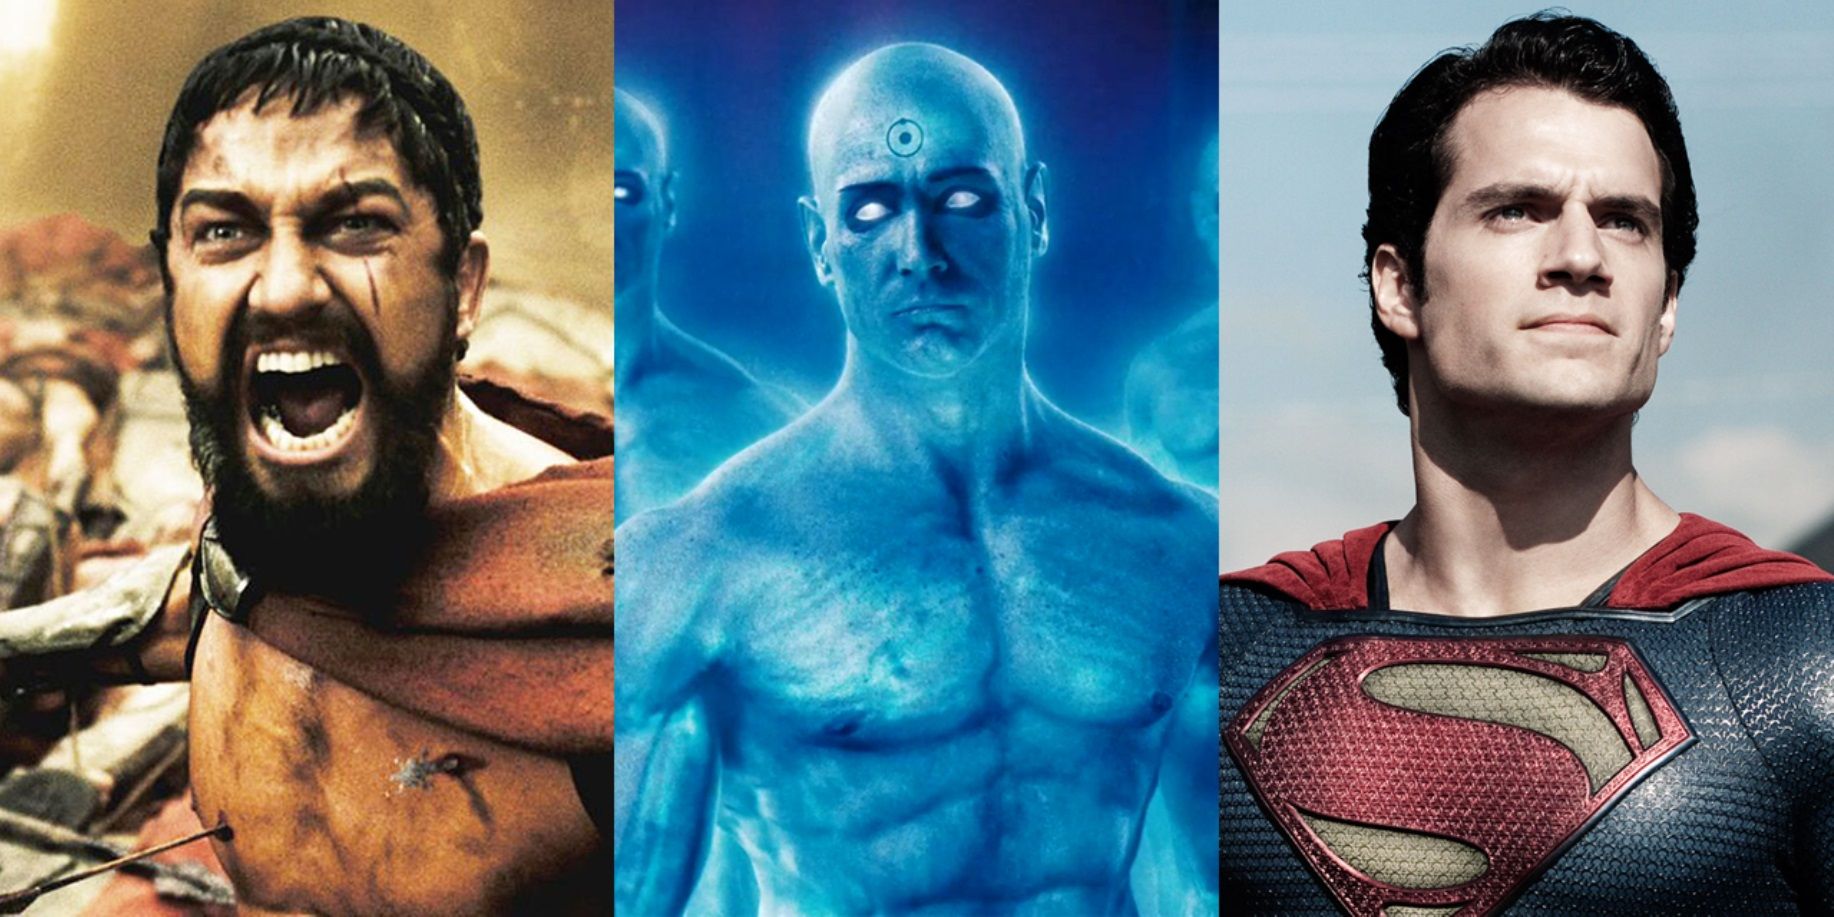 Split image of Leonidas in 300, Doctor Manhattan in Watchmen, and Superman in Man of Steel